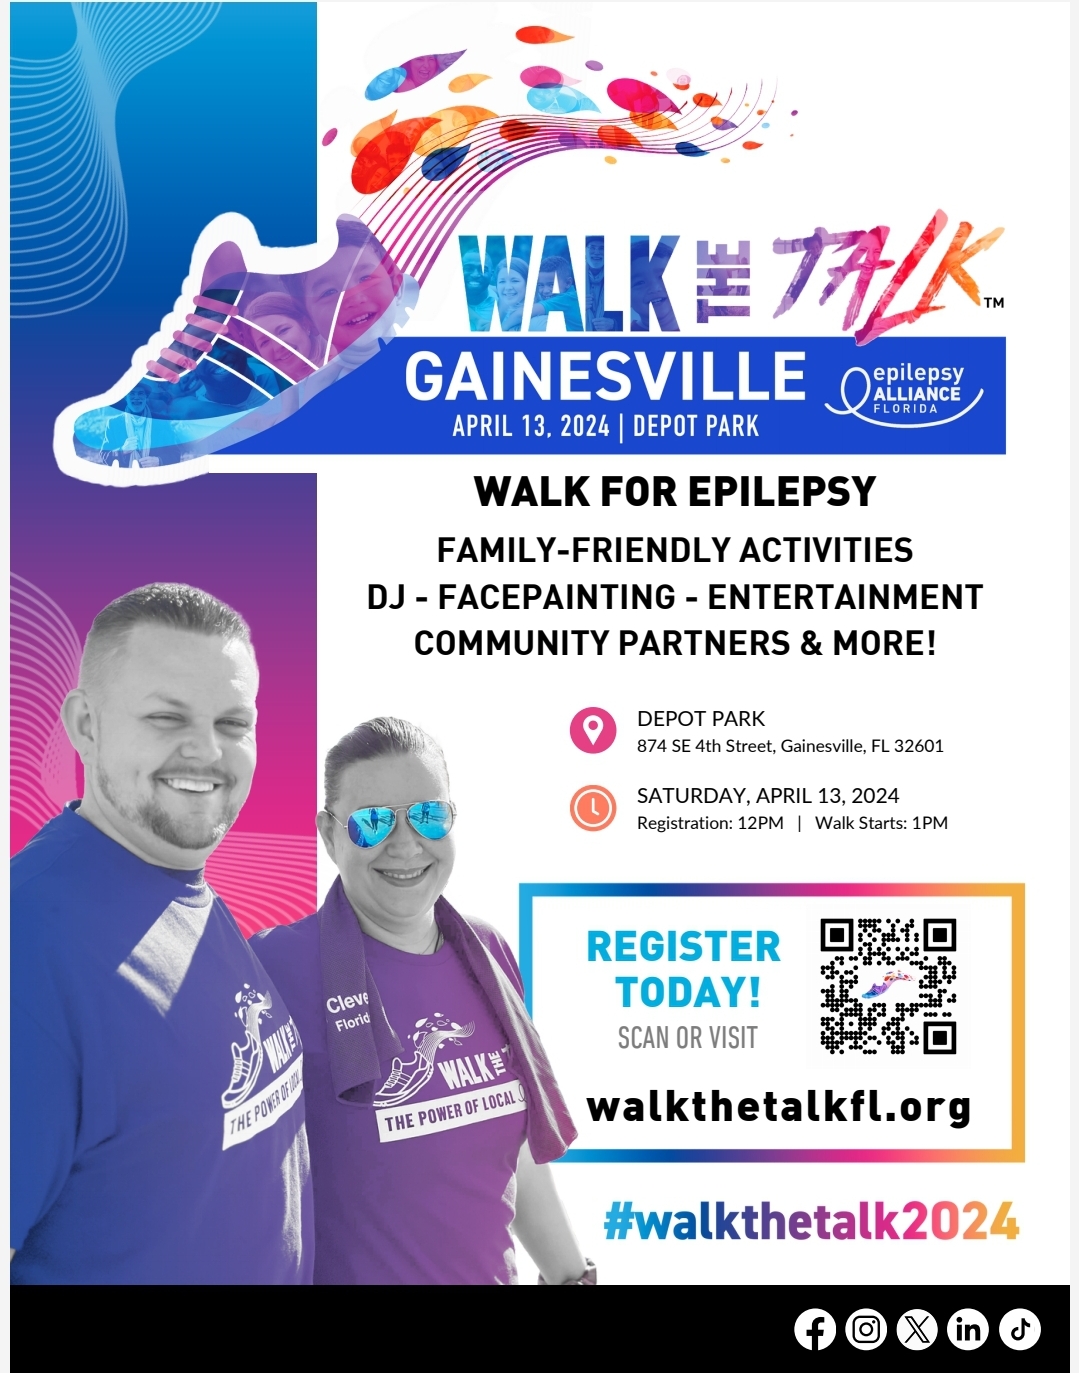 Walk The Talk for Epilepsy